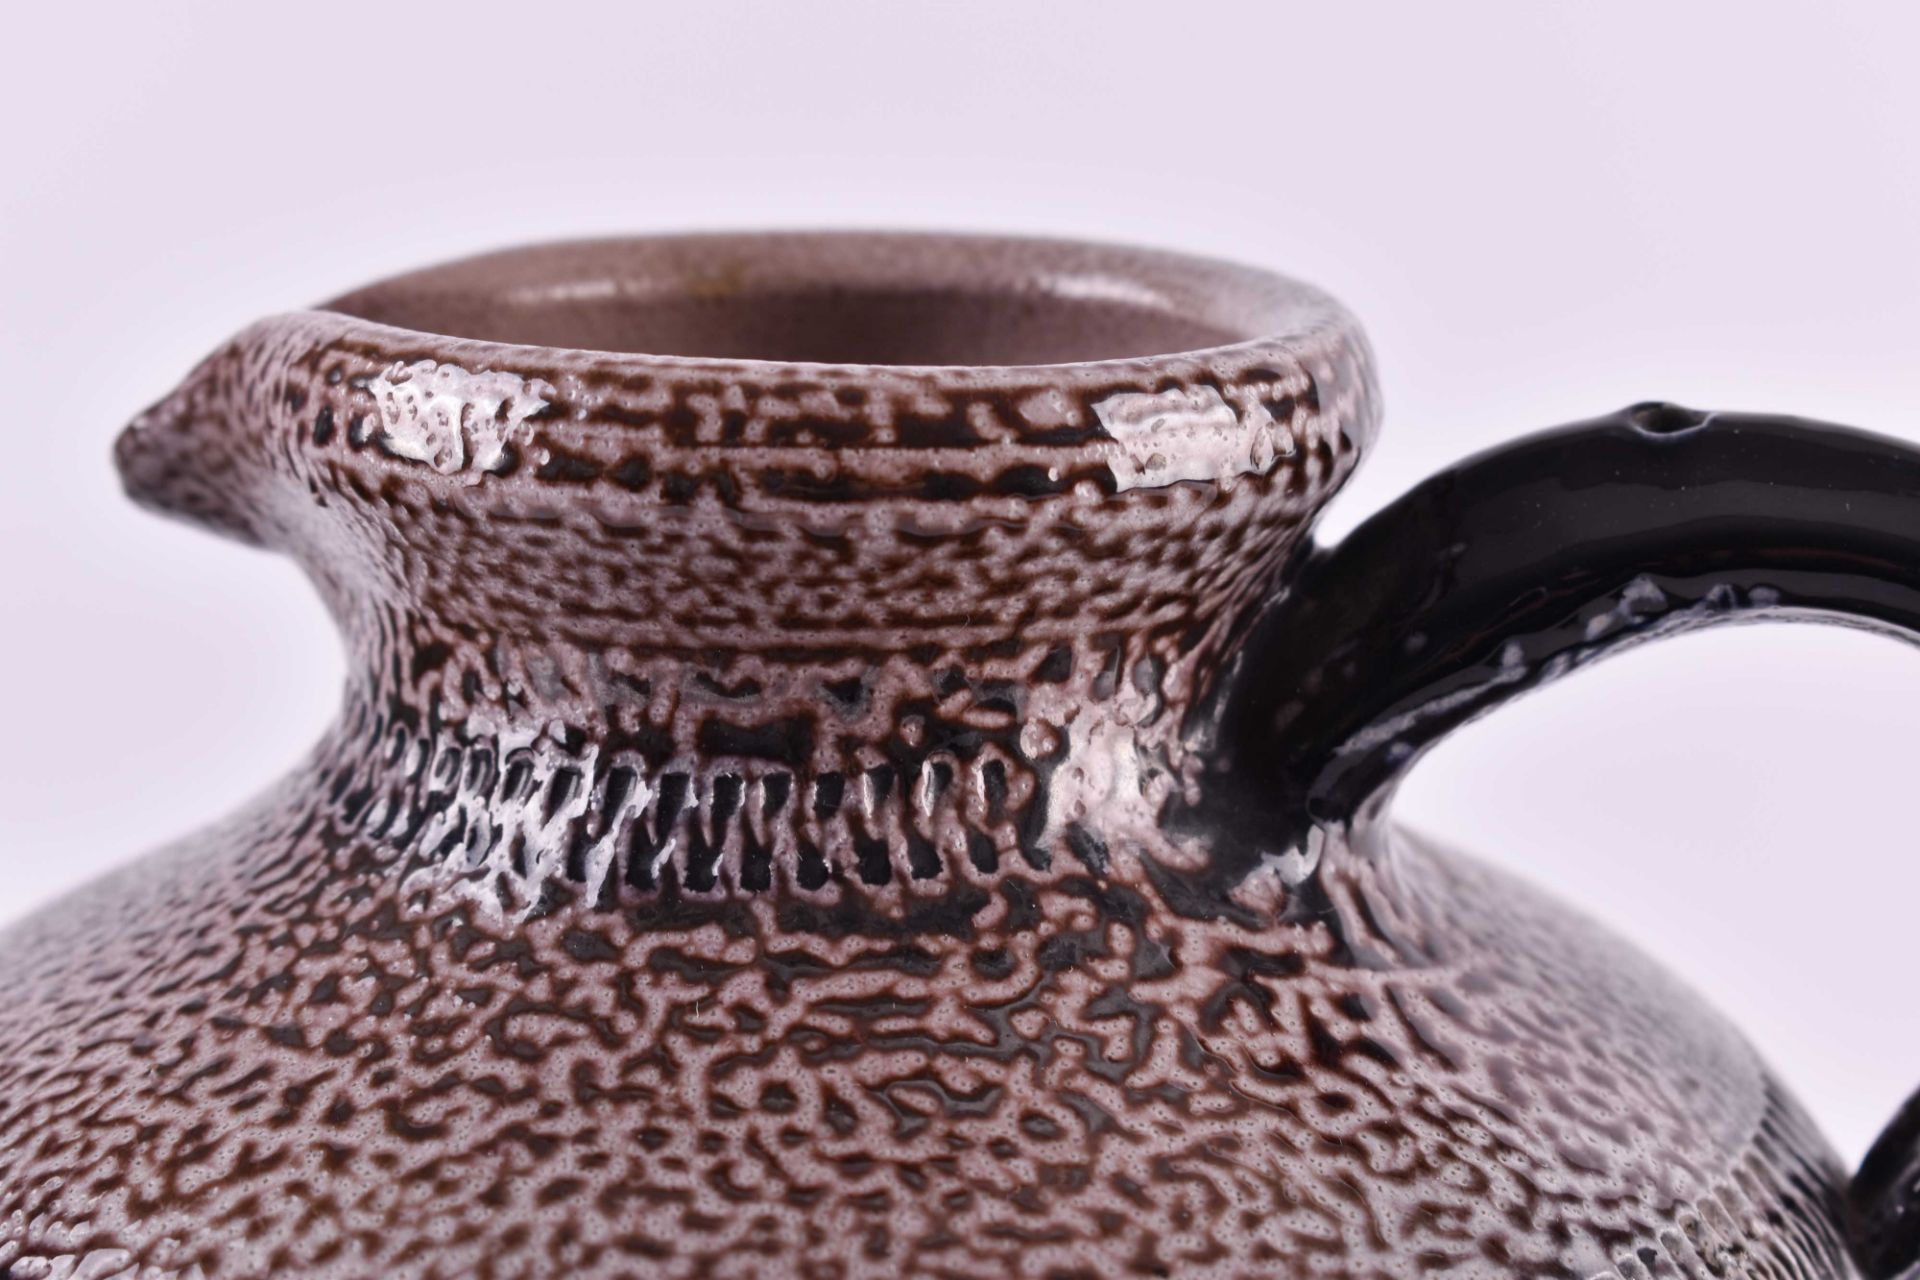 Ceramic mug Pfeiffer Gerhards Ransbachsigned under the bottom, addition a ceramic vase, mug - Bild 2 aus 5